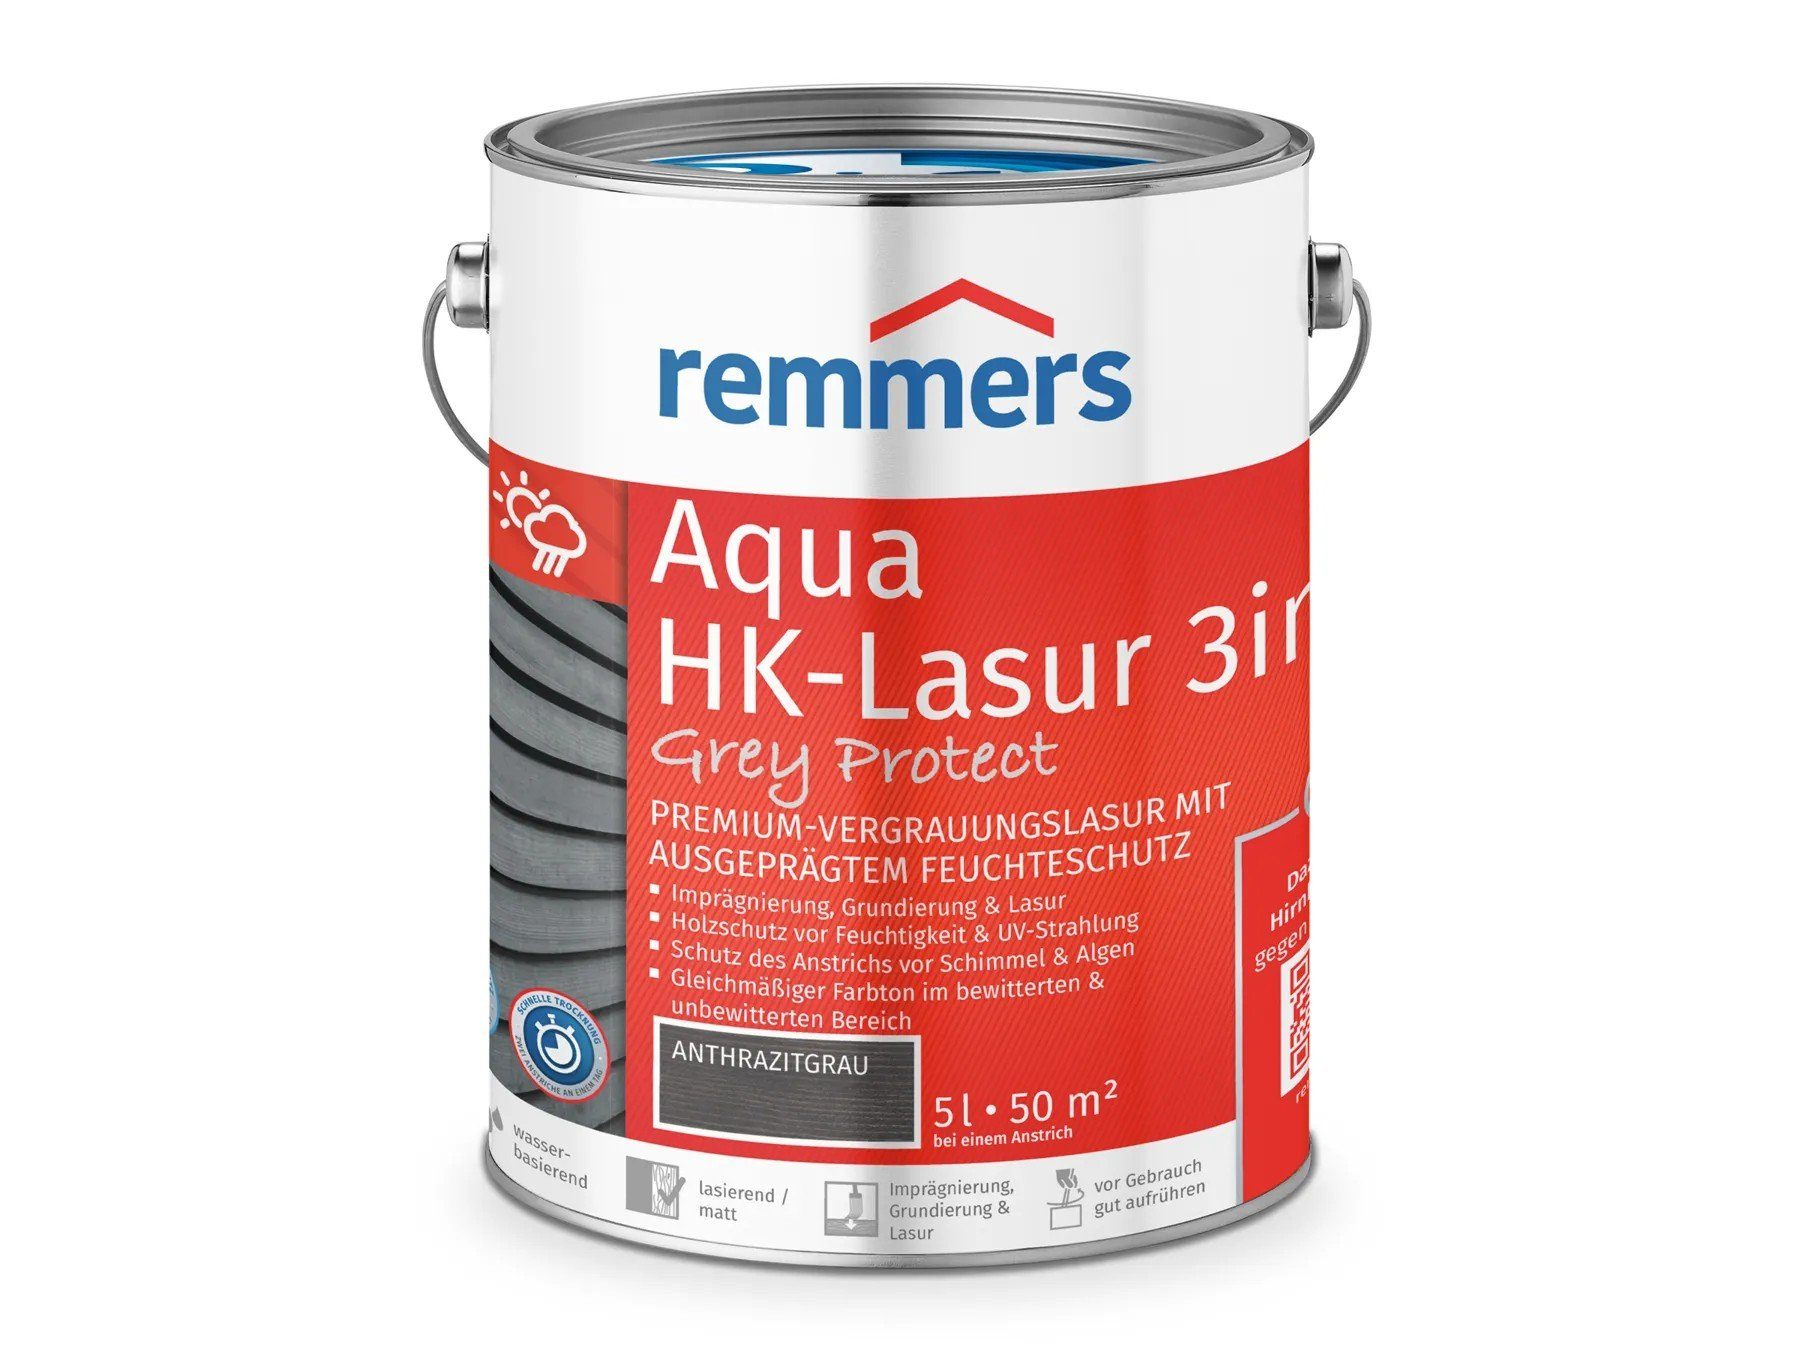 Remmers Holzschutzlasur Aqua HK-Lasur 3in1 Grey Protect platingrau (FT-26788)